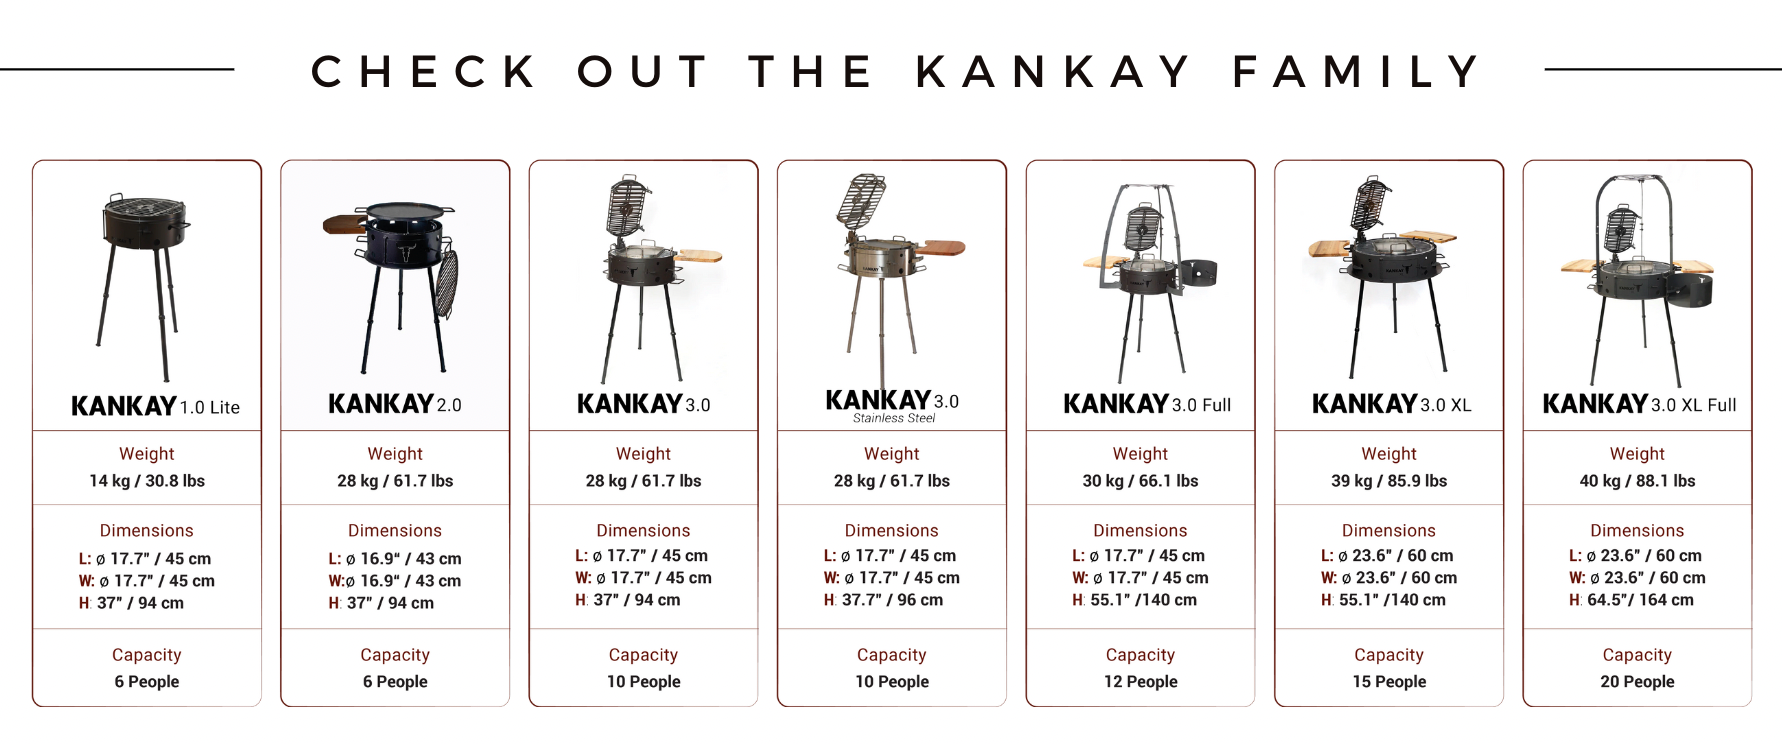 Kankay: The Kankay Family Banner